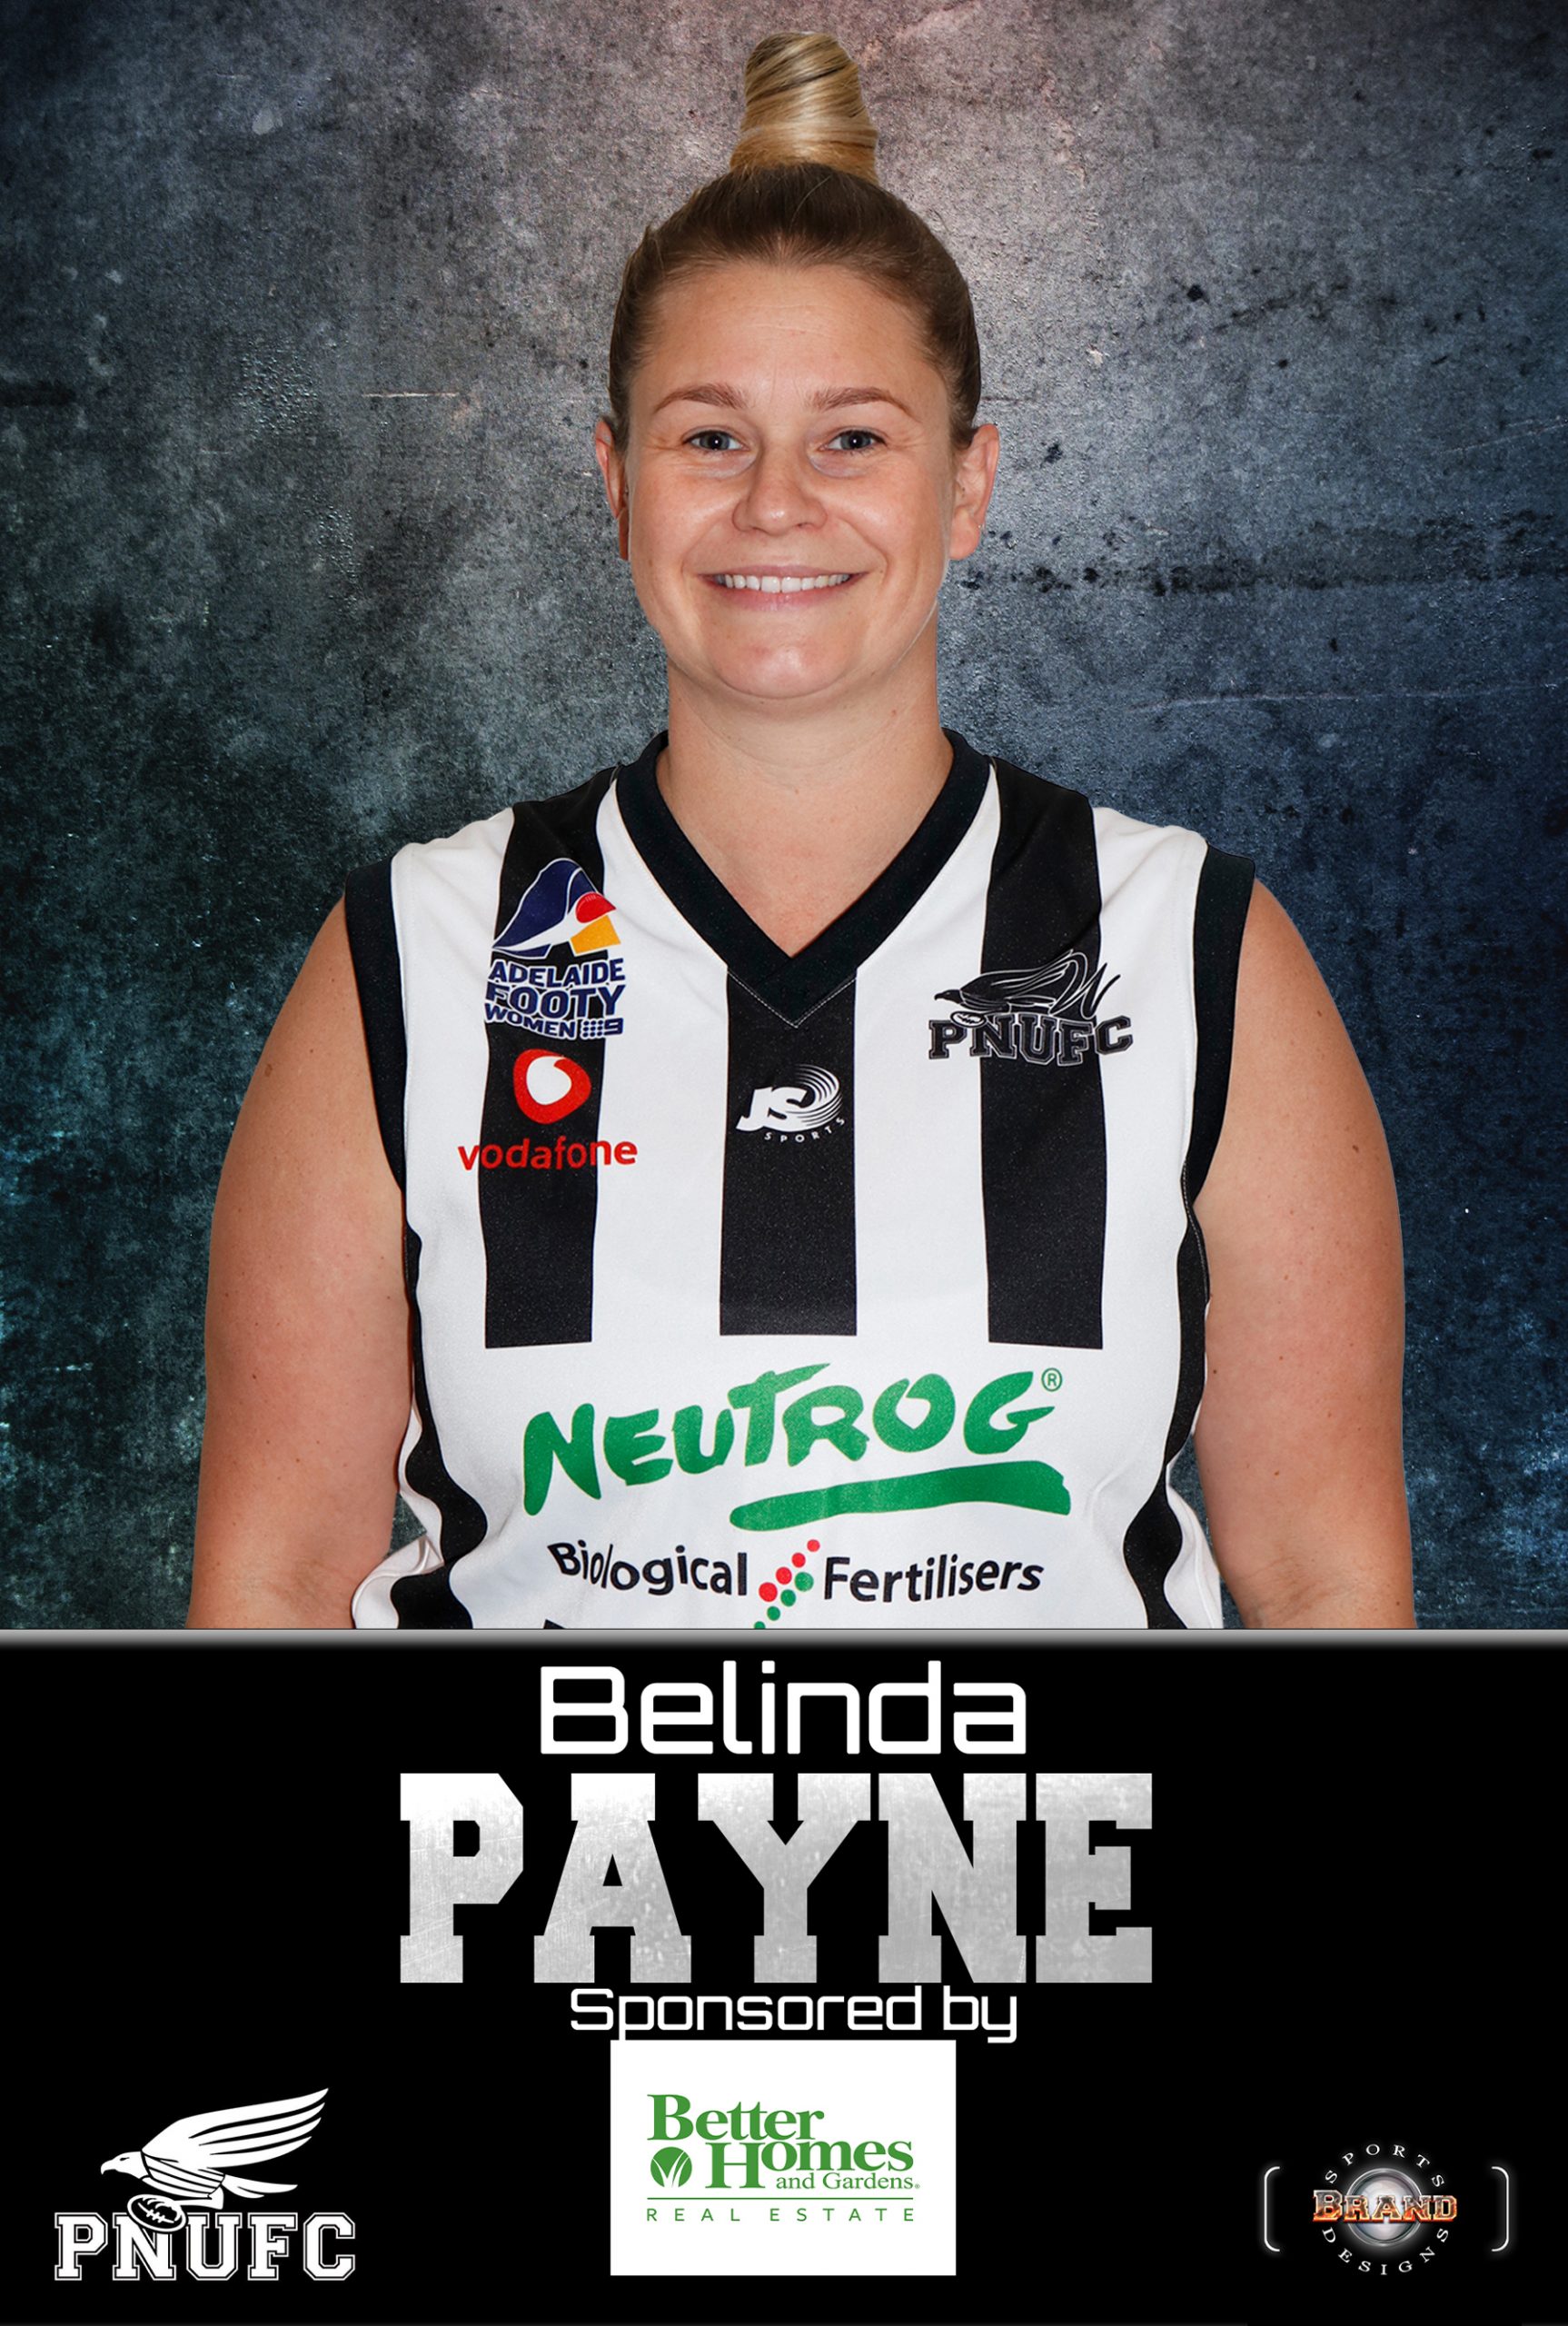 Belinda Payne